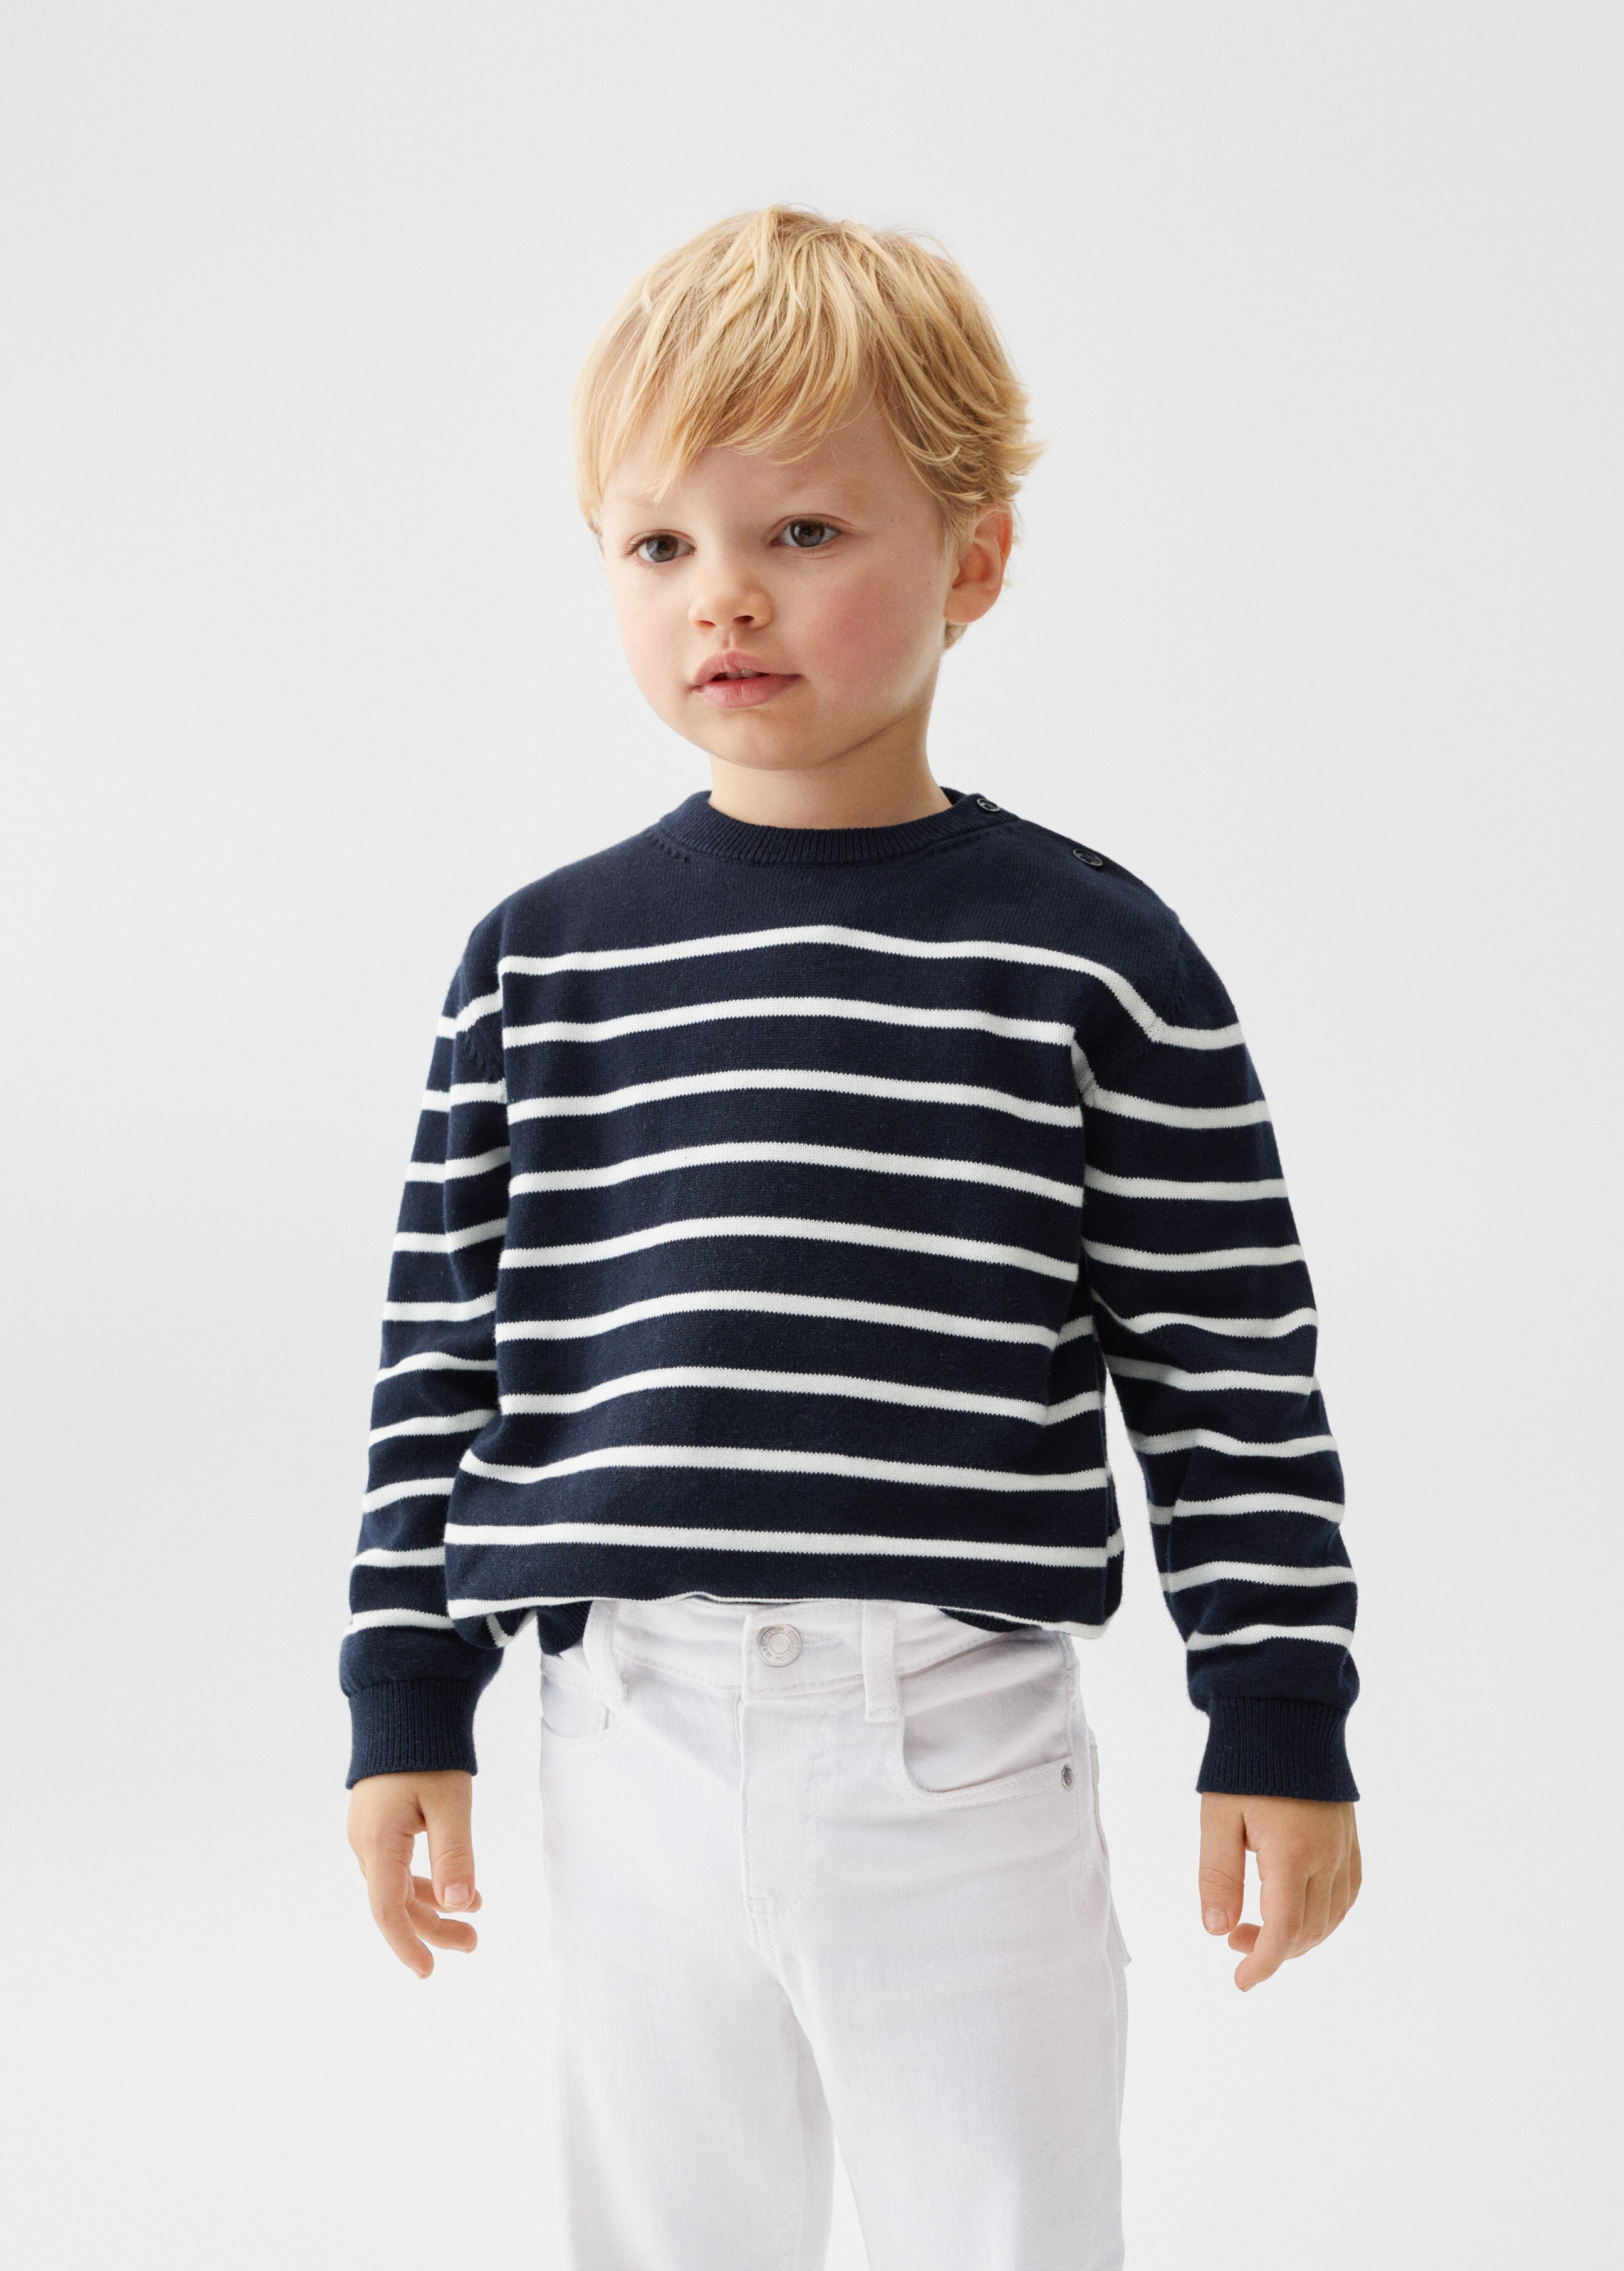 Striped cotton-blend sweater - Medium plane